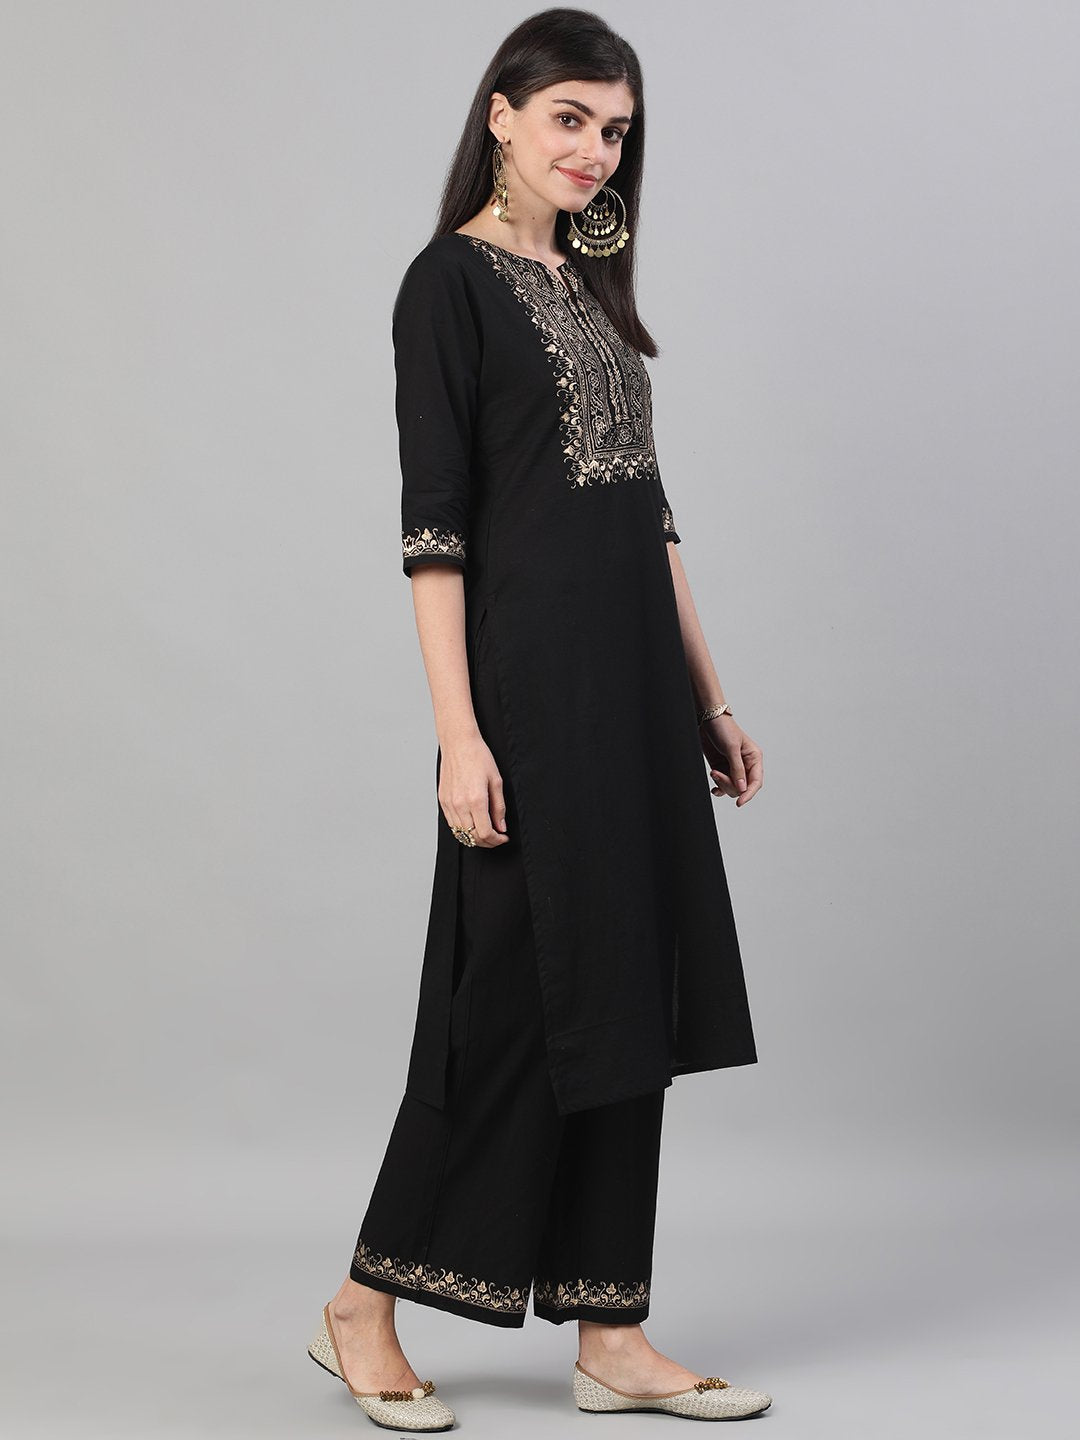 Women's Black Three-Quarter Sleeves Block Printed Straight Kurta With Palazzo And Pockets - Nayo Clothing